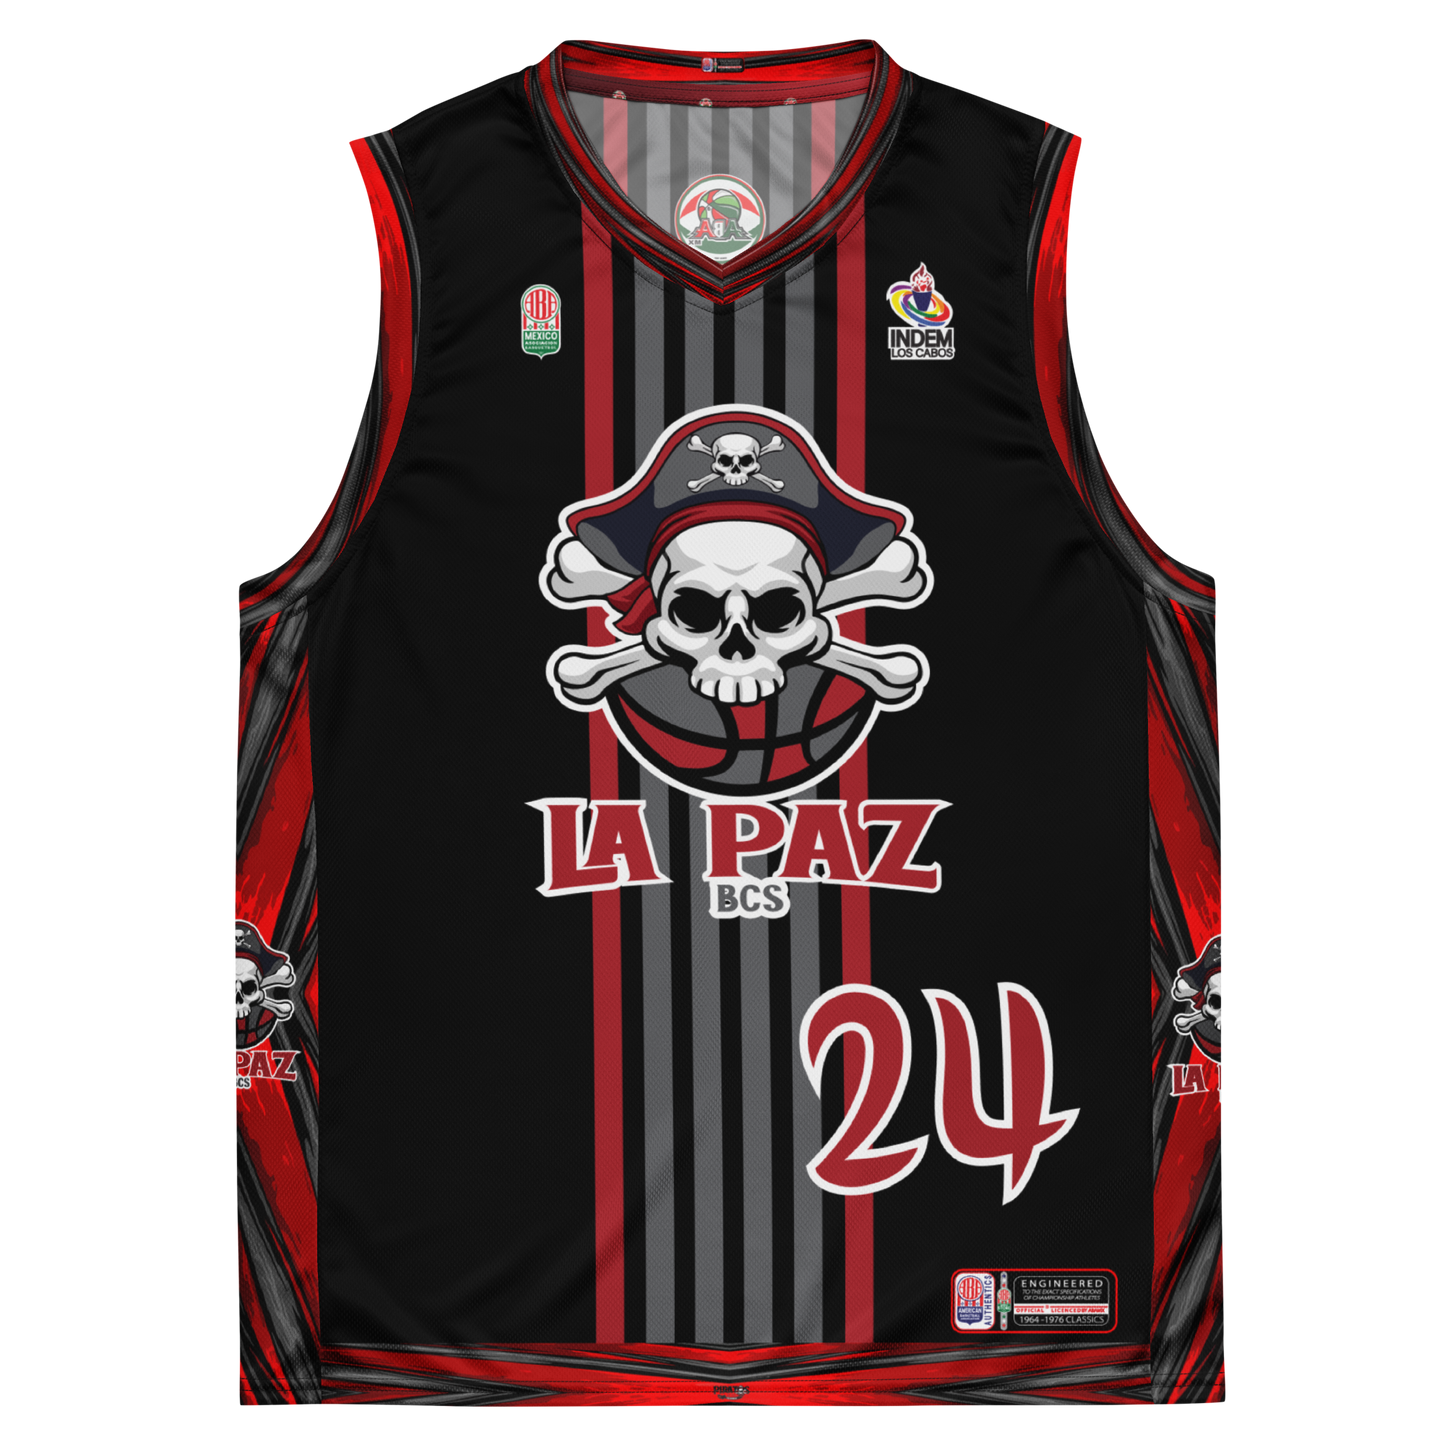 The La Paz Piratas Basketball Team's Black Jersey